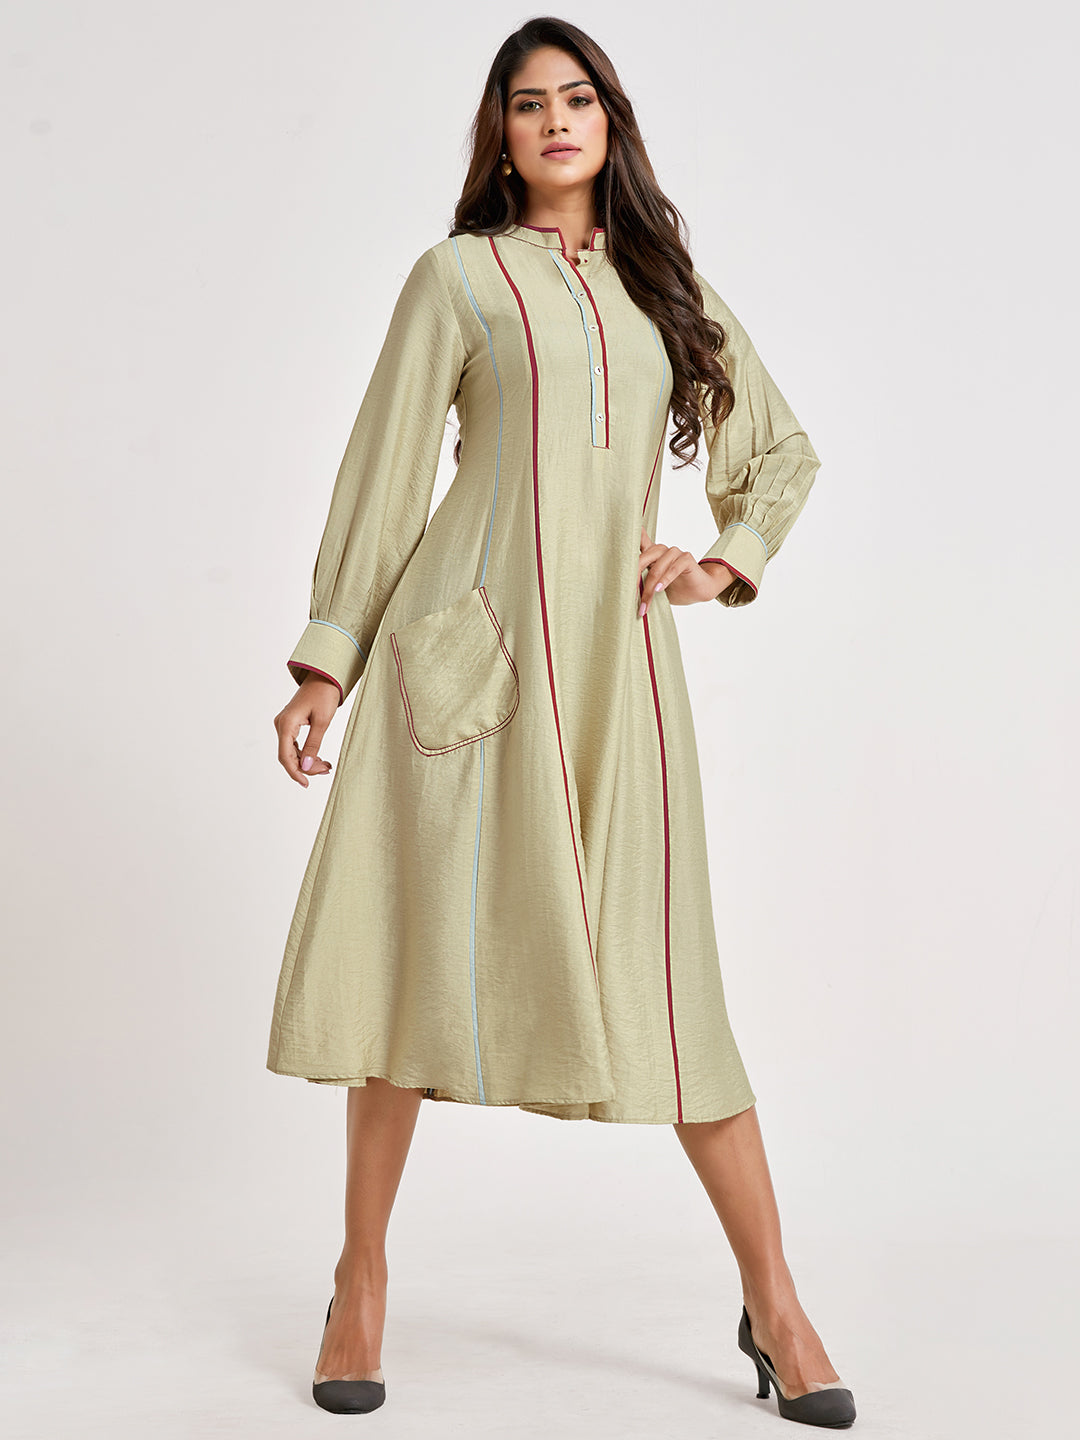 A-Line Dress With Cuffed Sleeve - ARH739